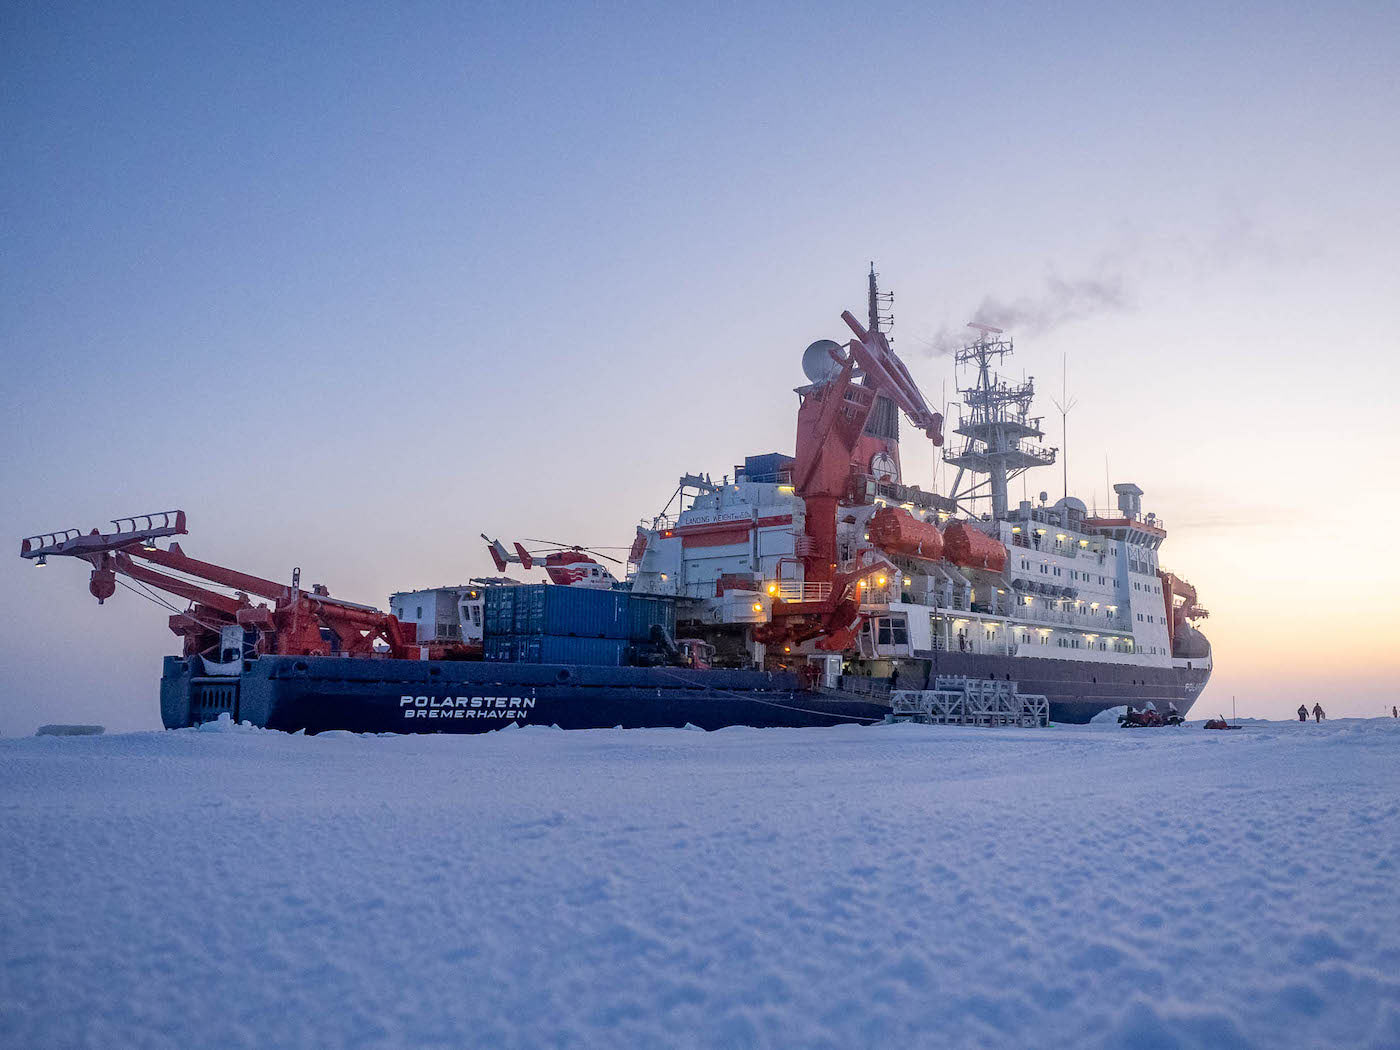 The German icebreaker, the Polarstern, frozen into Arctic sea ice.